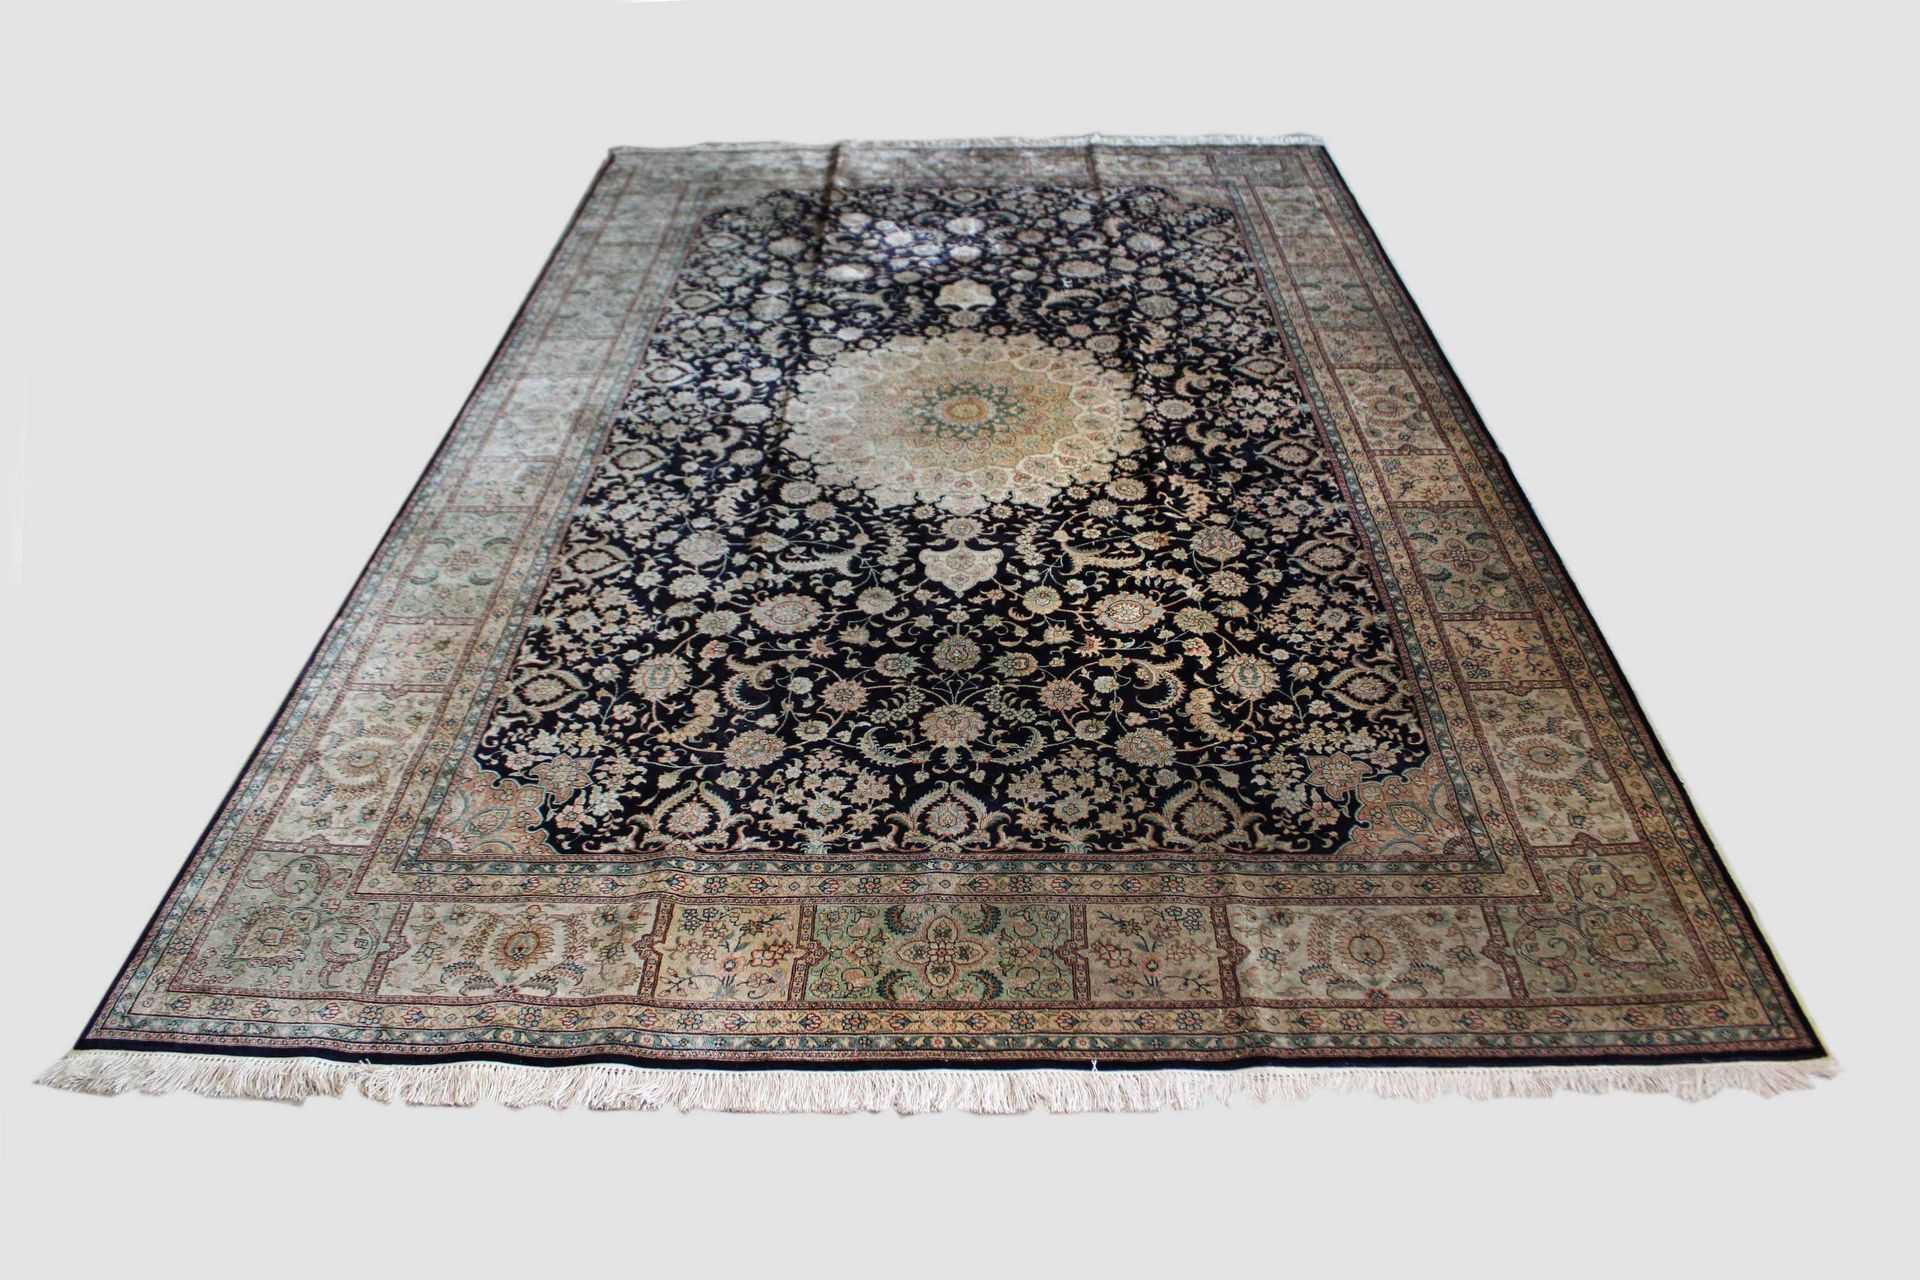 Teppich, China Alfombra, China, seda. Dimensiones: 185 x 283 cm.